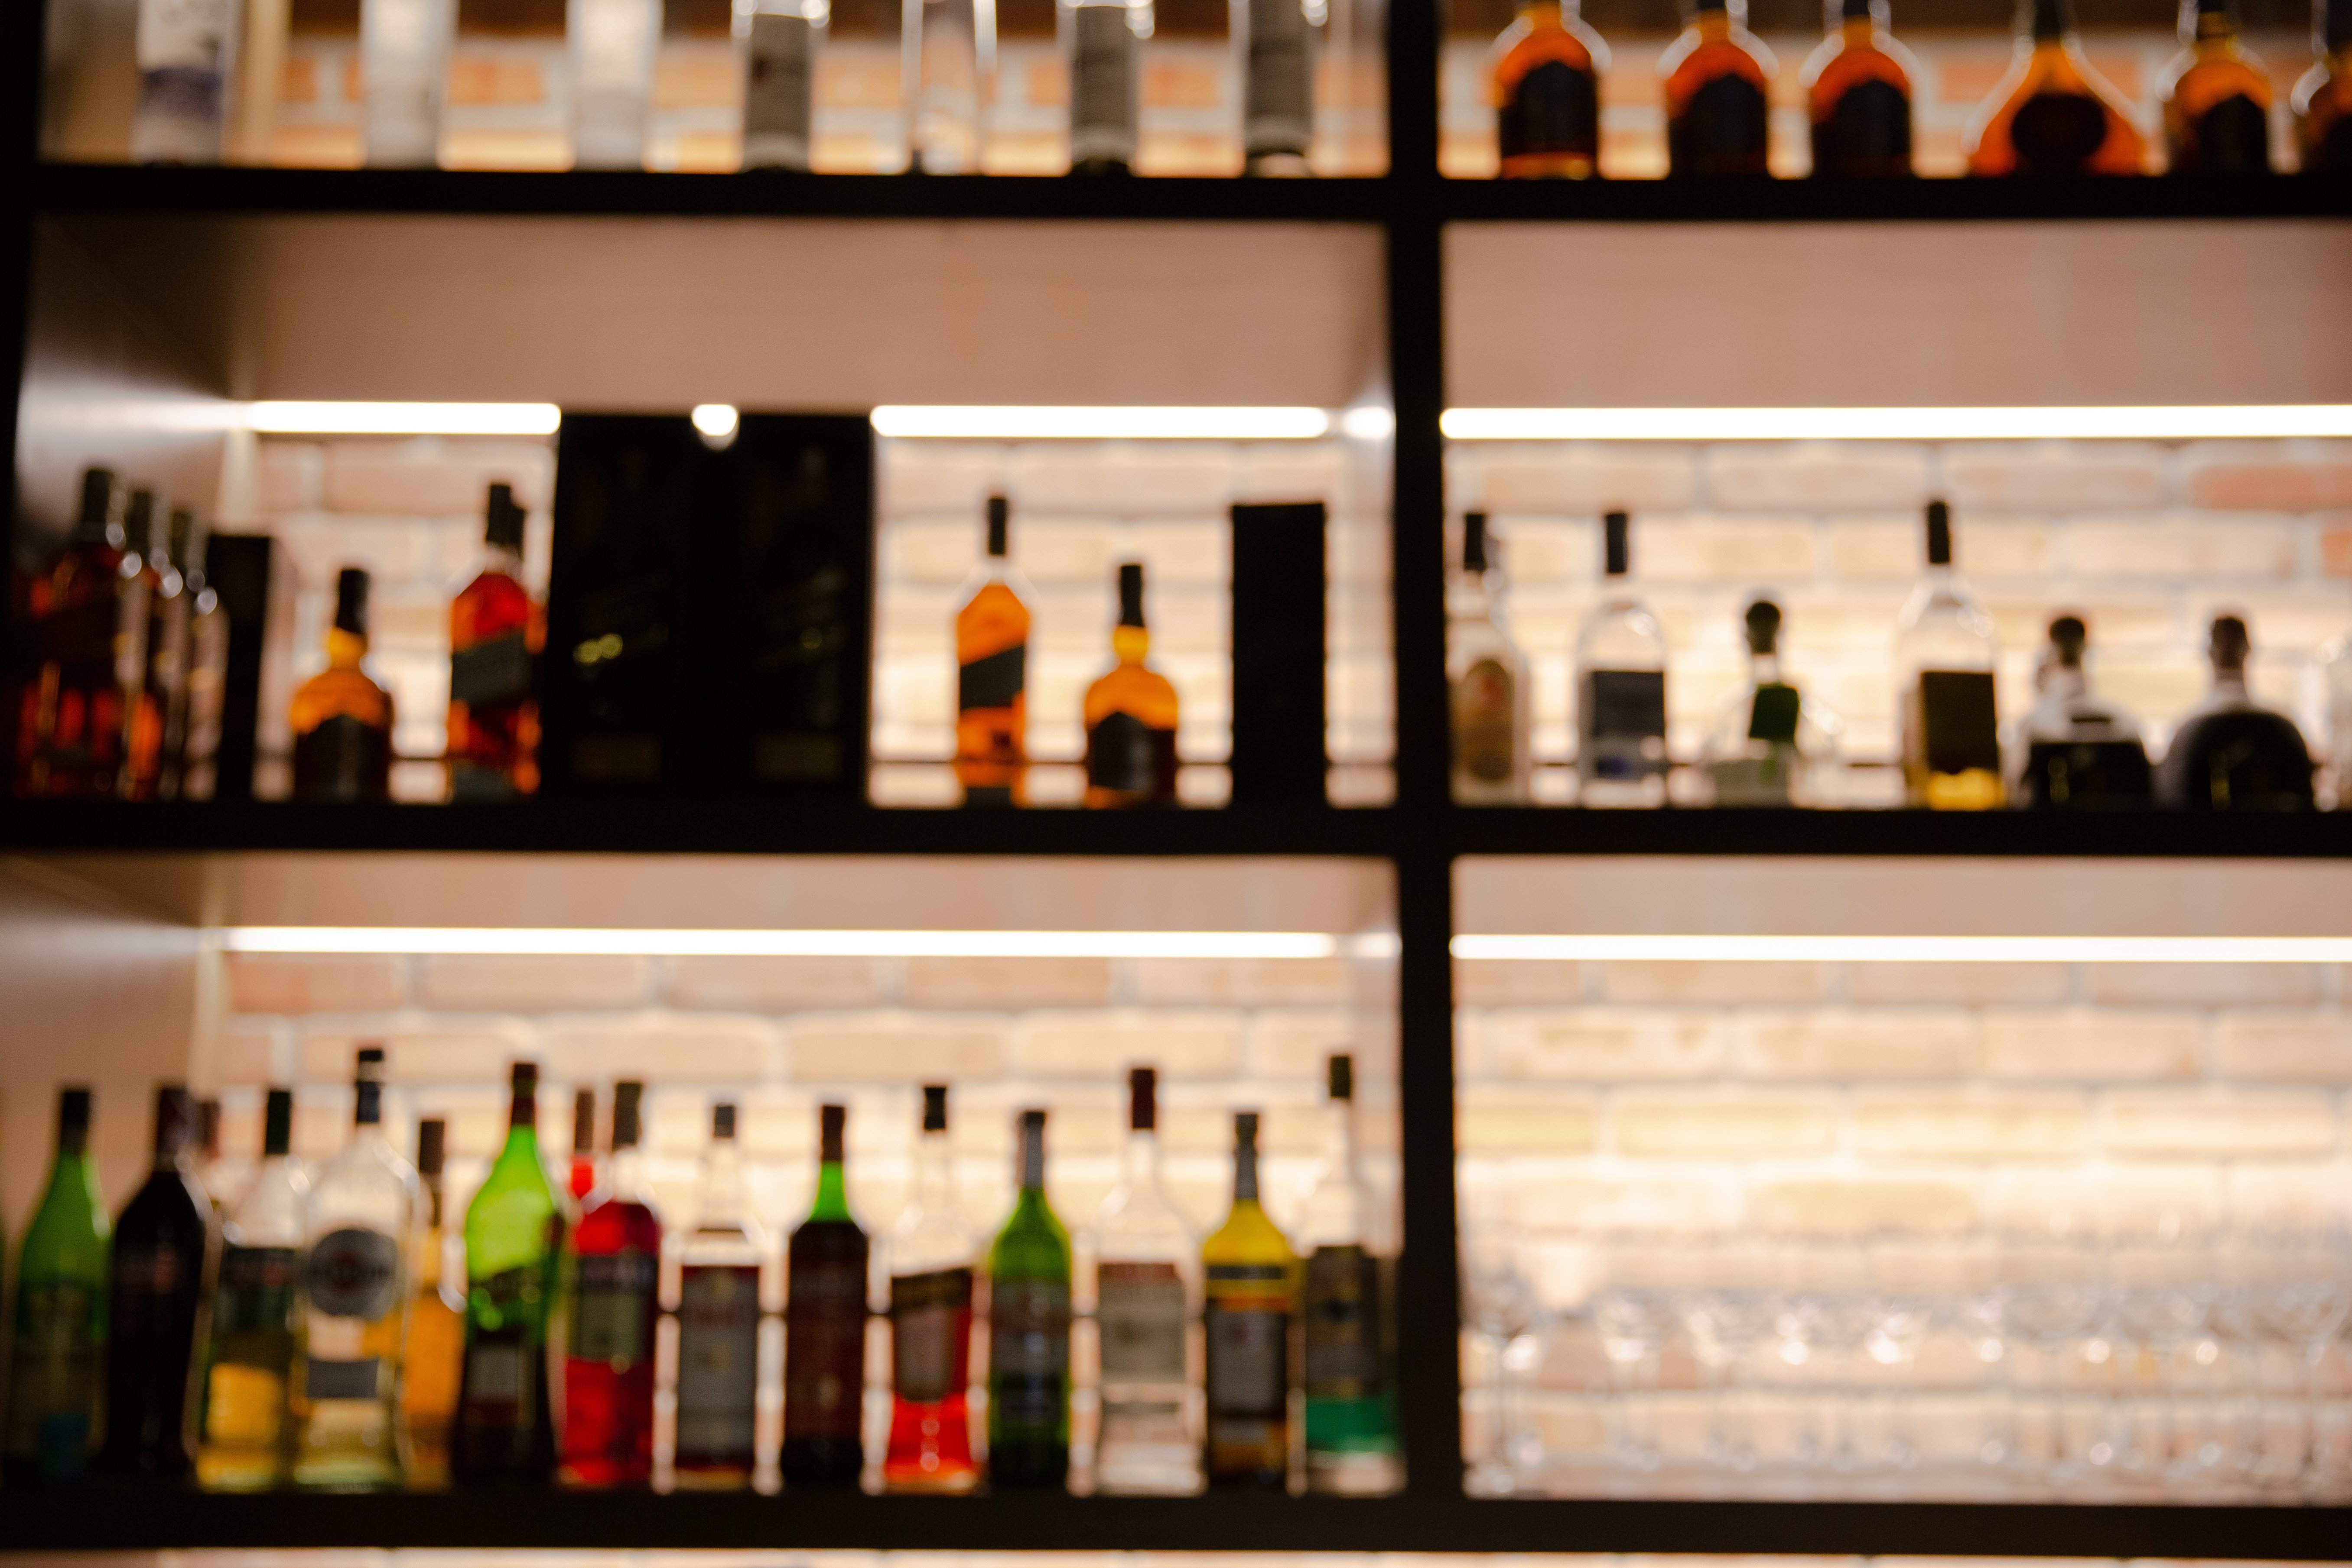 blurred-liquor-bar-in-vintage-photo-filter-style-2022-11-04-23-29-52-utc